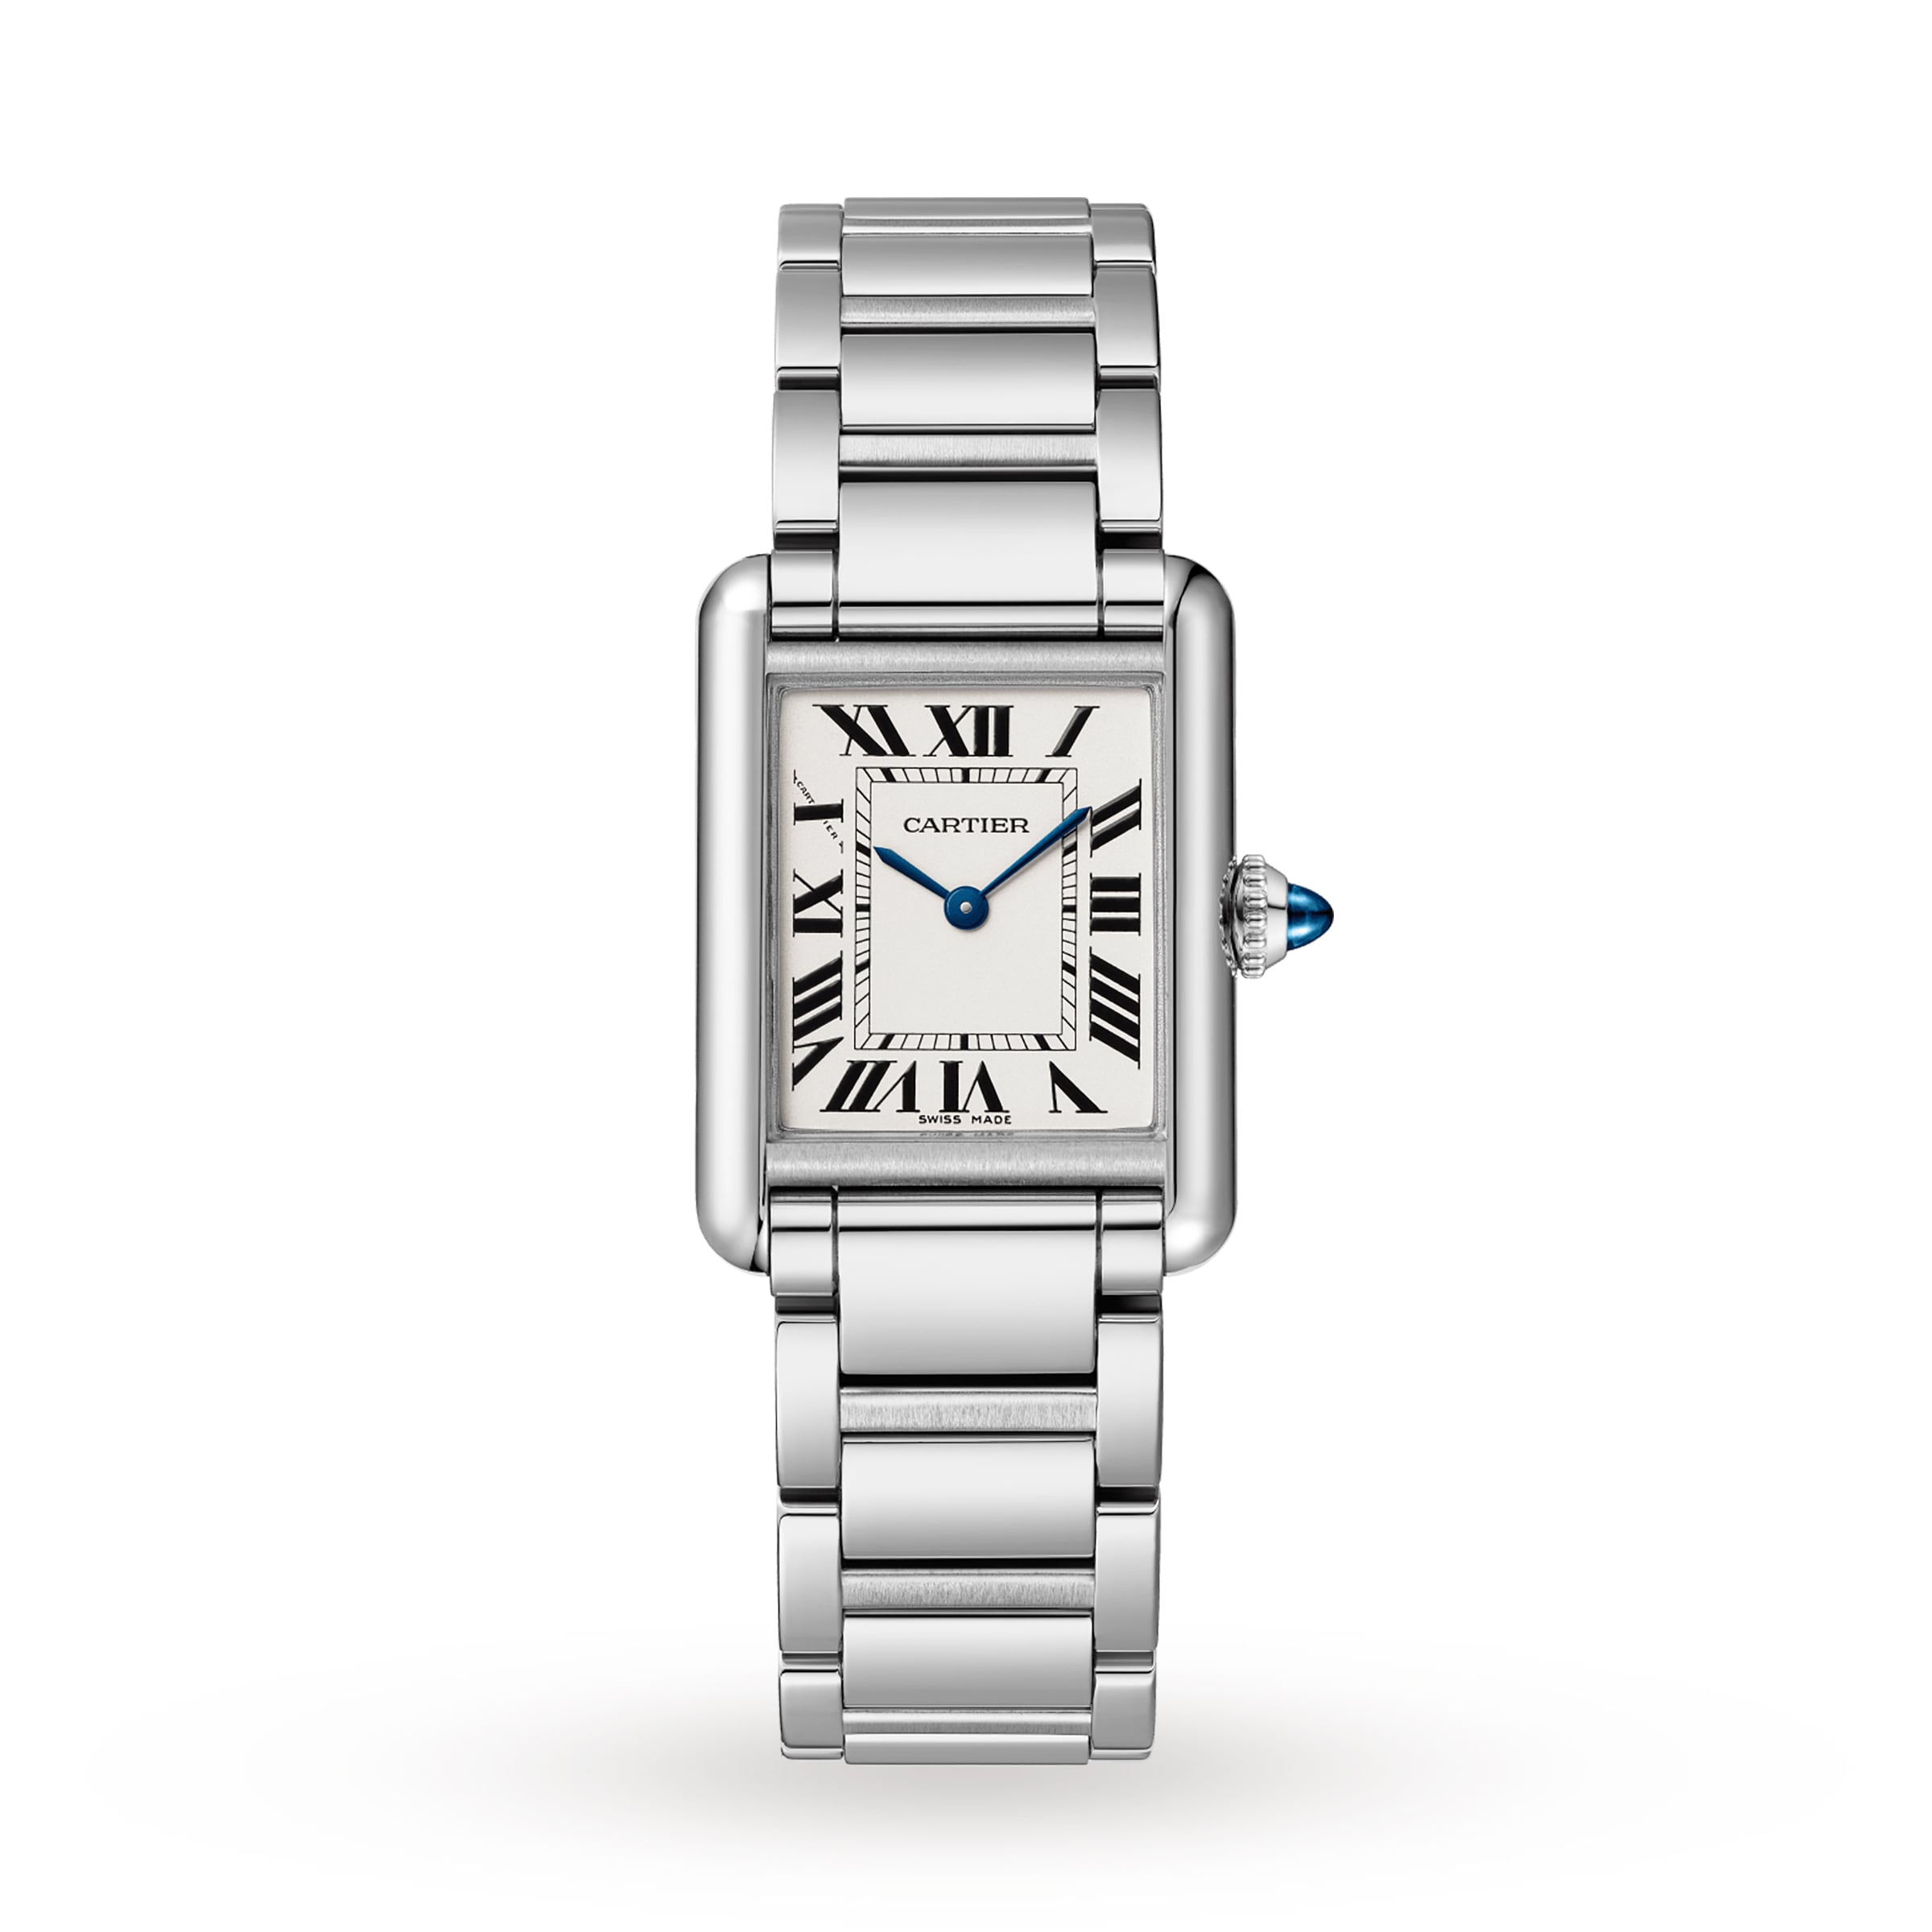 Wrist Watches Cartier Women Women Jewelry & Watches Cartier Women Watches Cartier Women Wrist Watches Cartier Women Wrist Watch CARTIER silver 